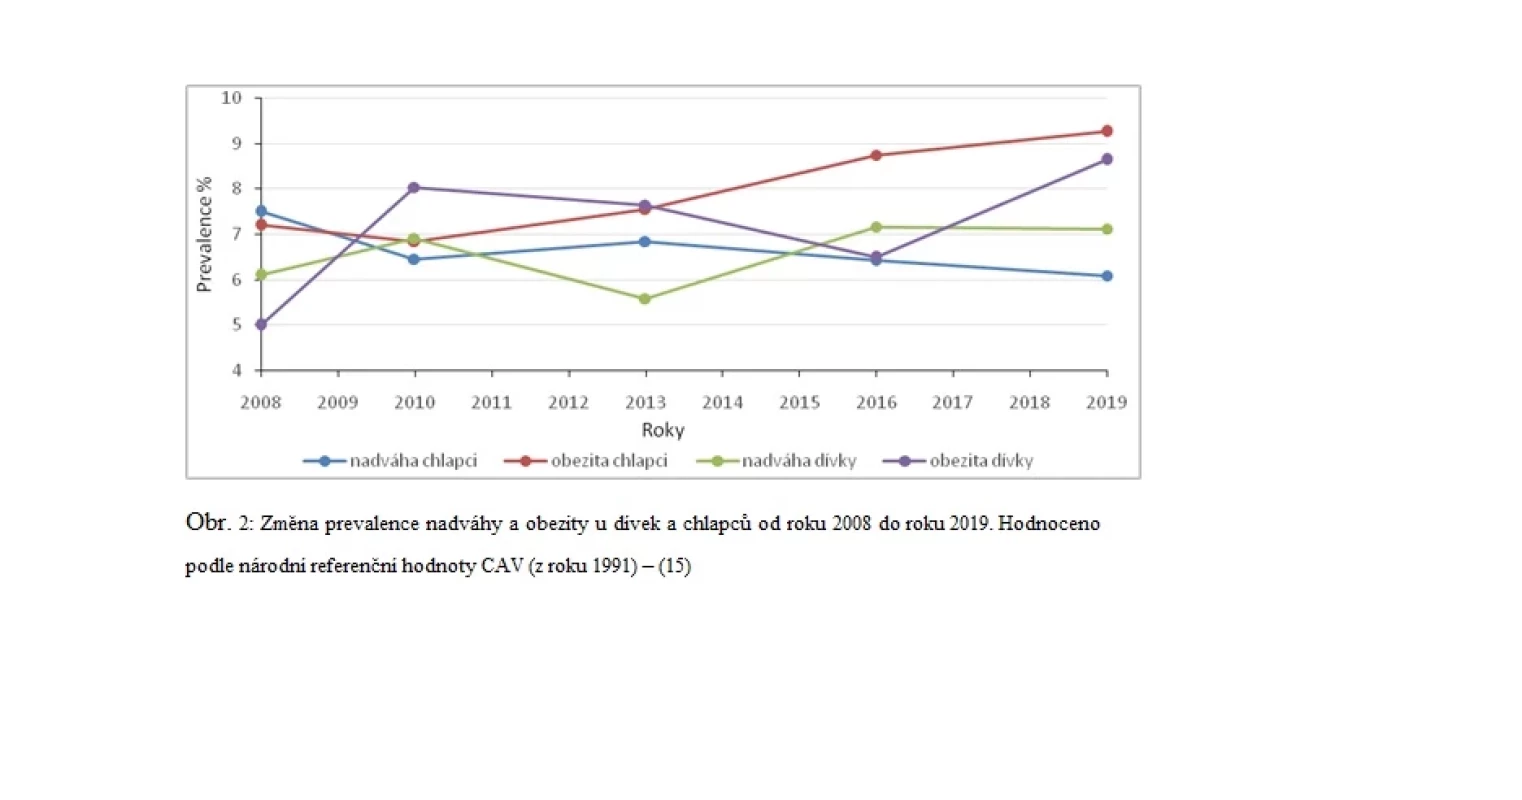 Změna prevalence nadváhy a obezity u dívek a chlapců od roku 2008 do roku 2019. 